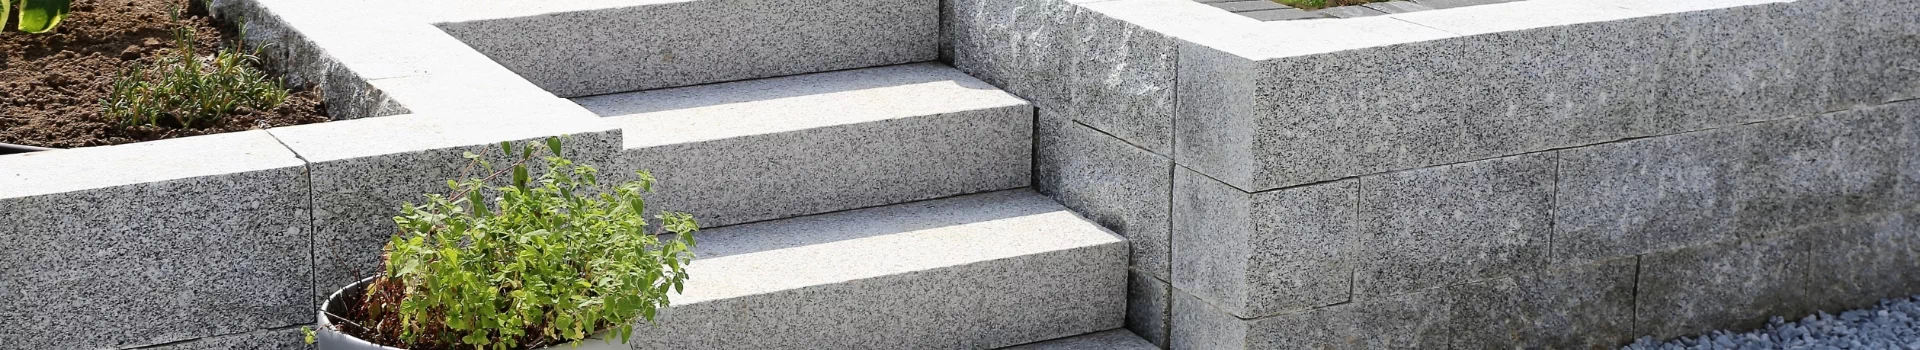 schody z granitu